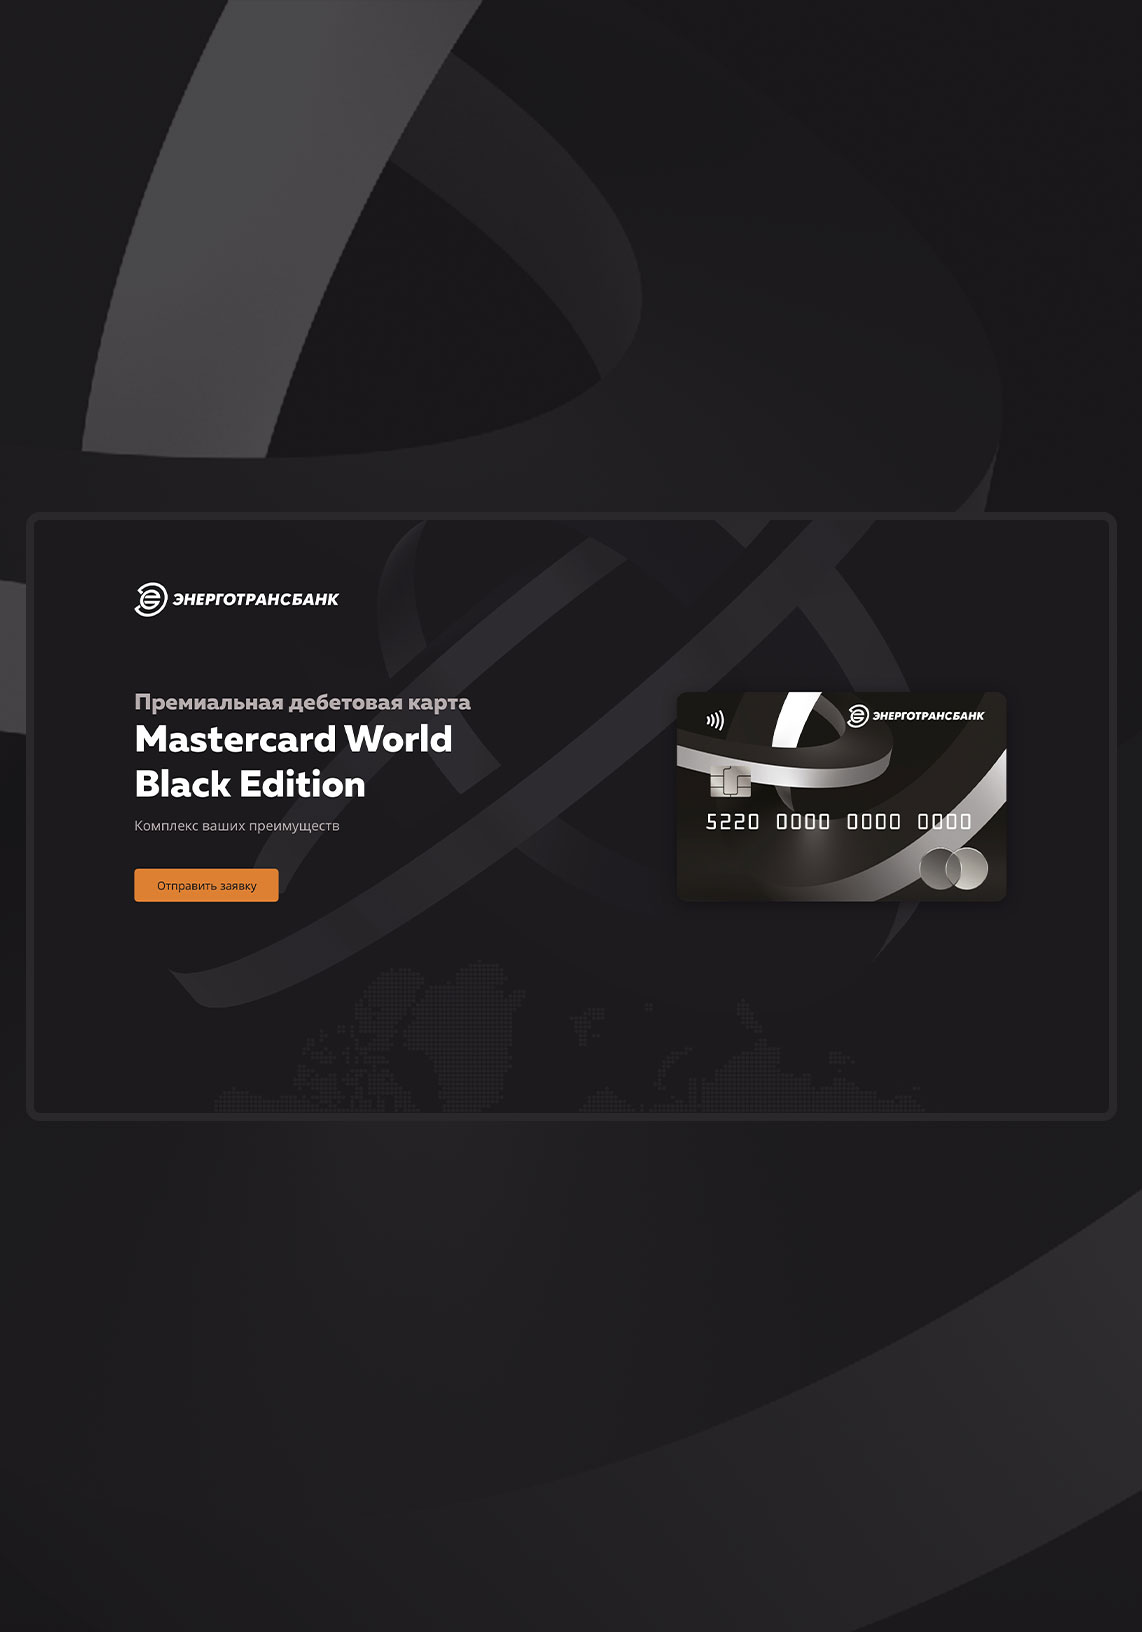 Лендинг Mastercard World Black Edition